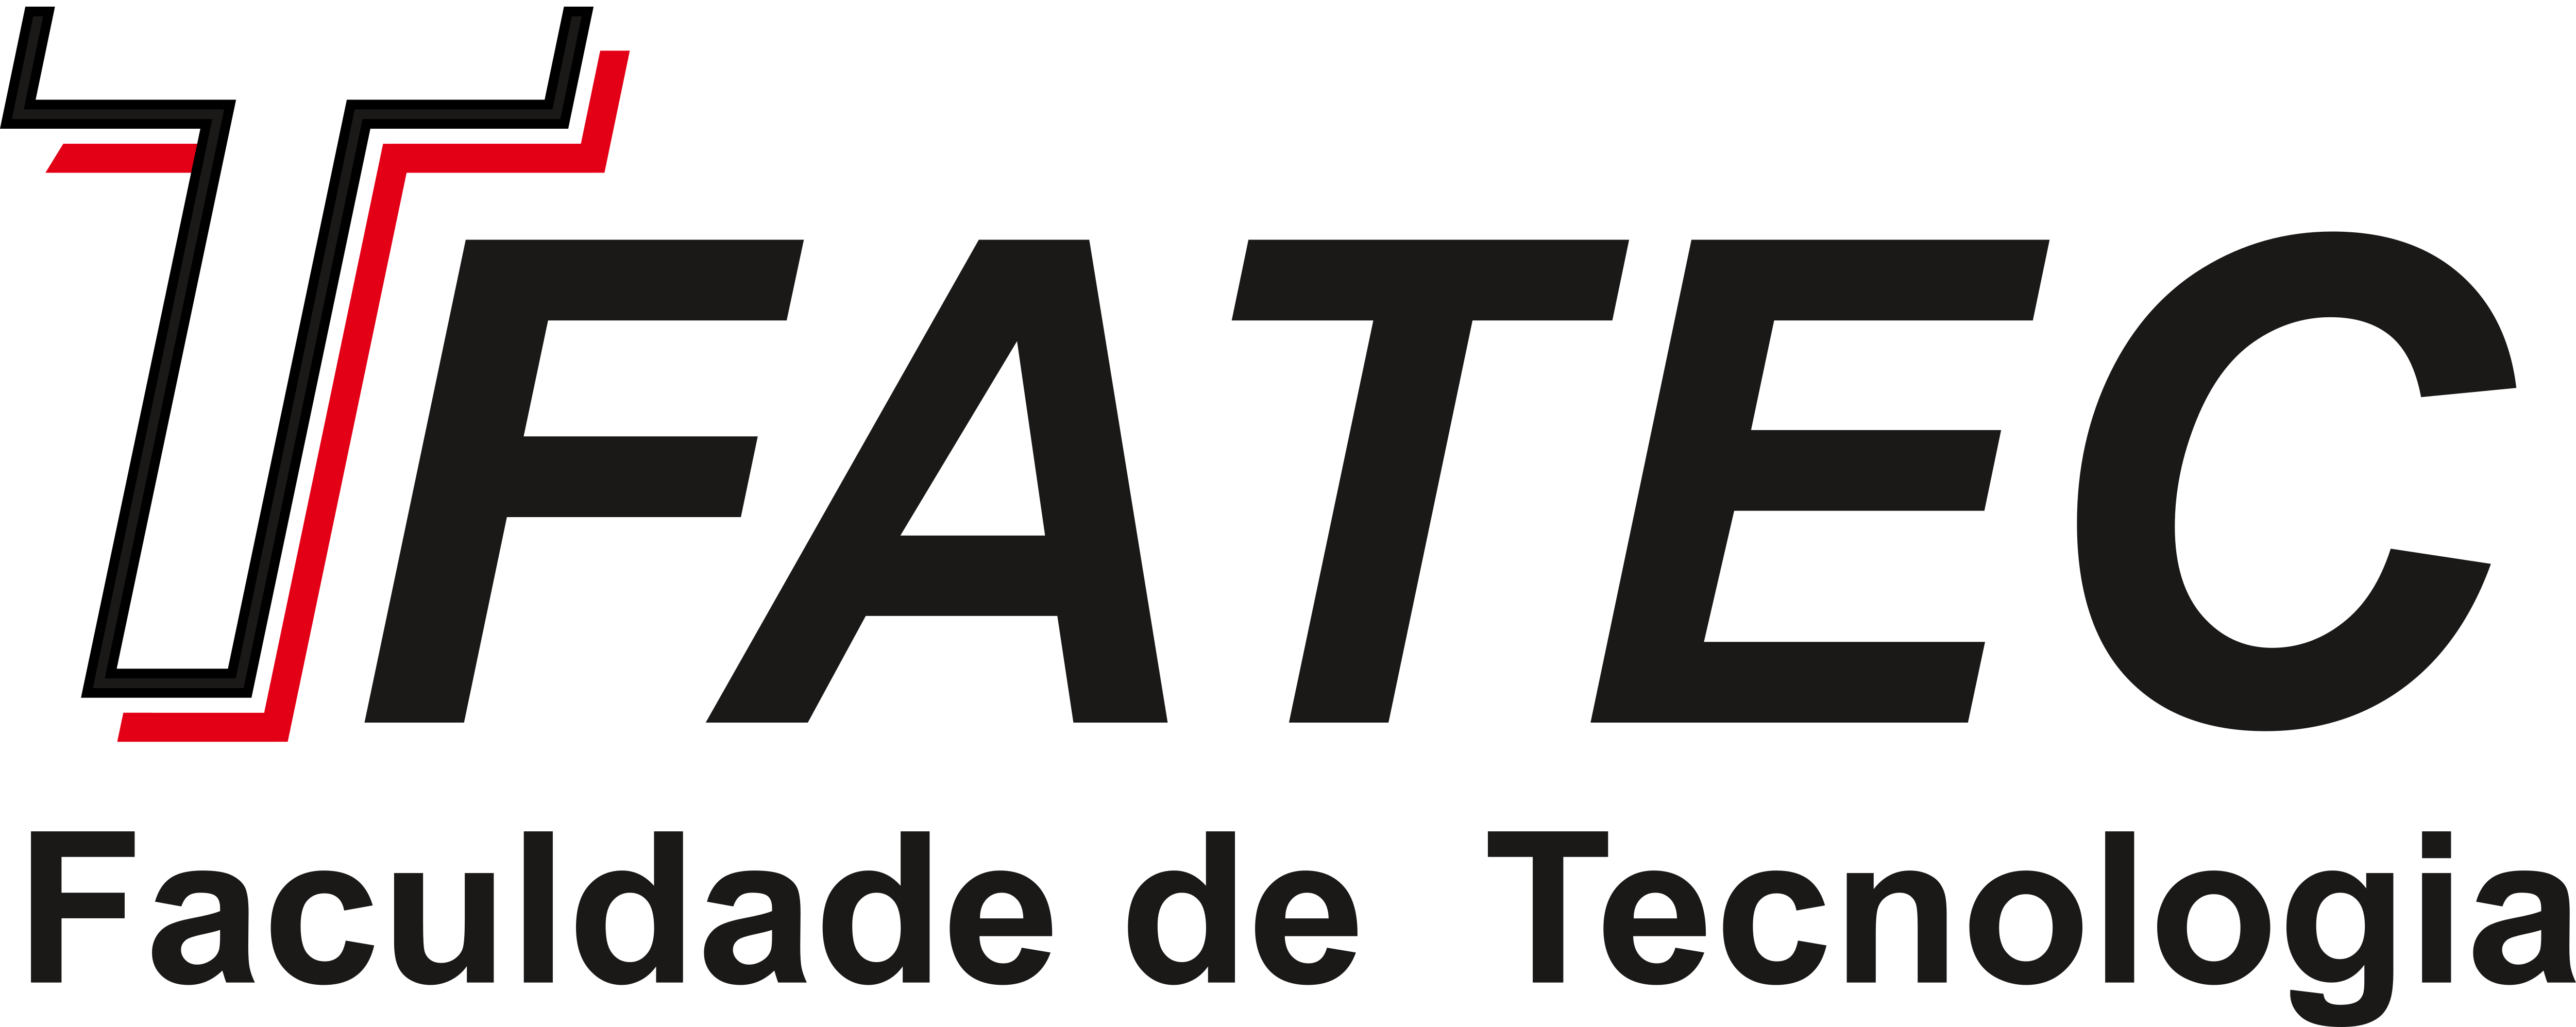 fatec_logo